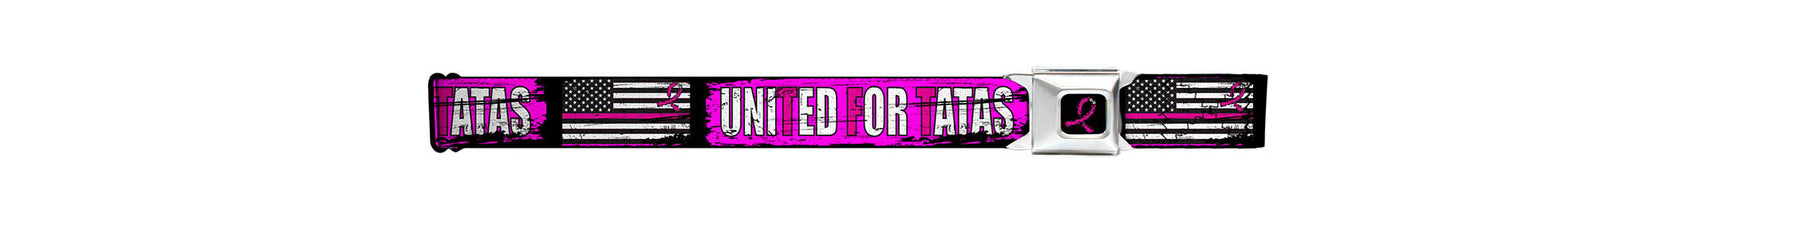 Topless for TATAs